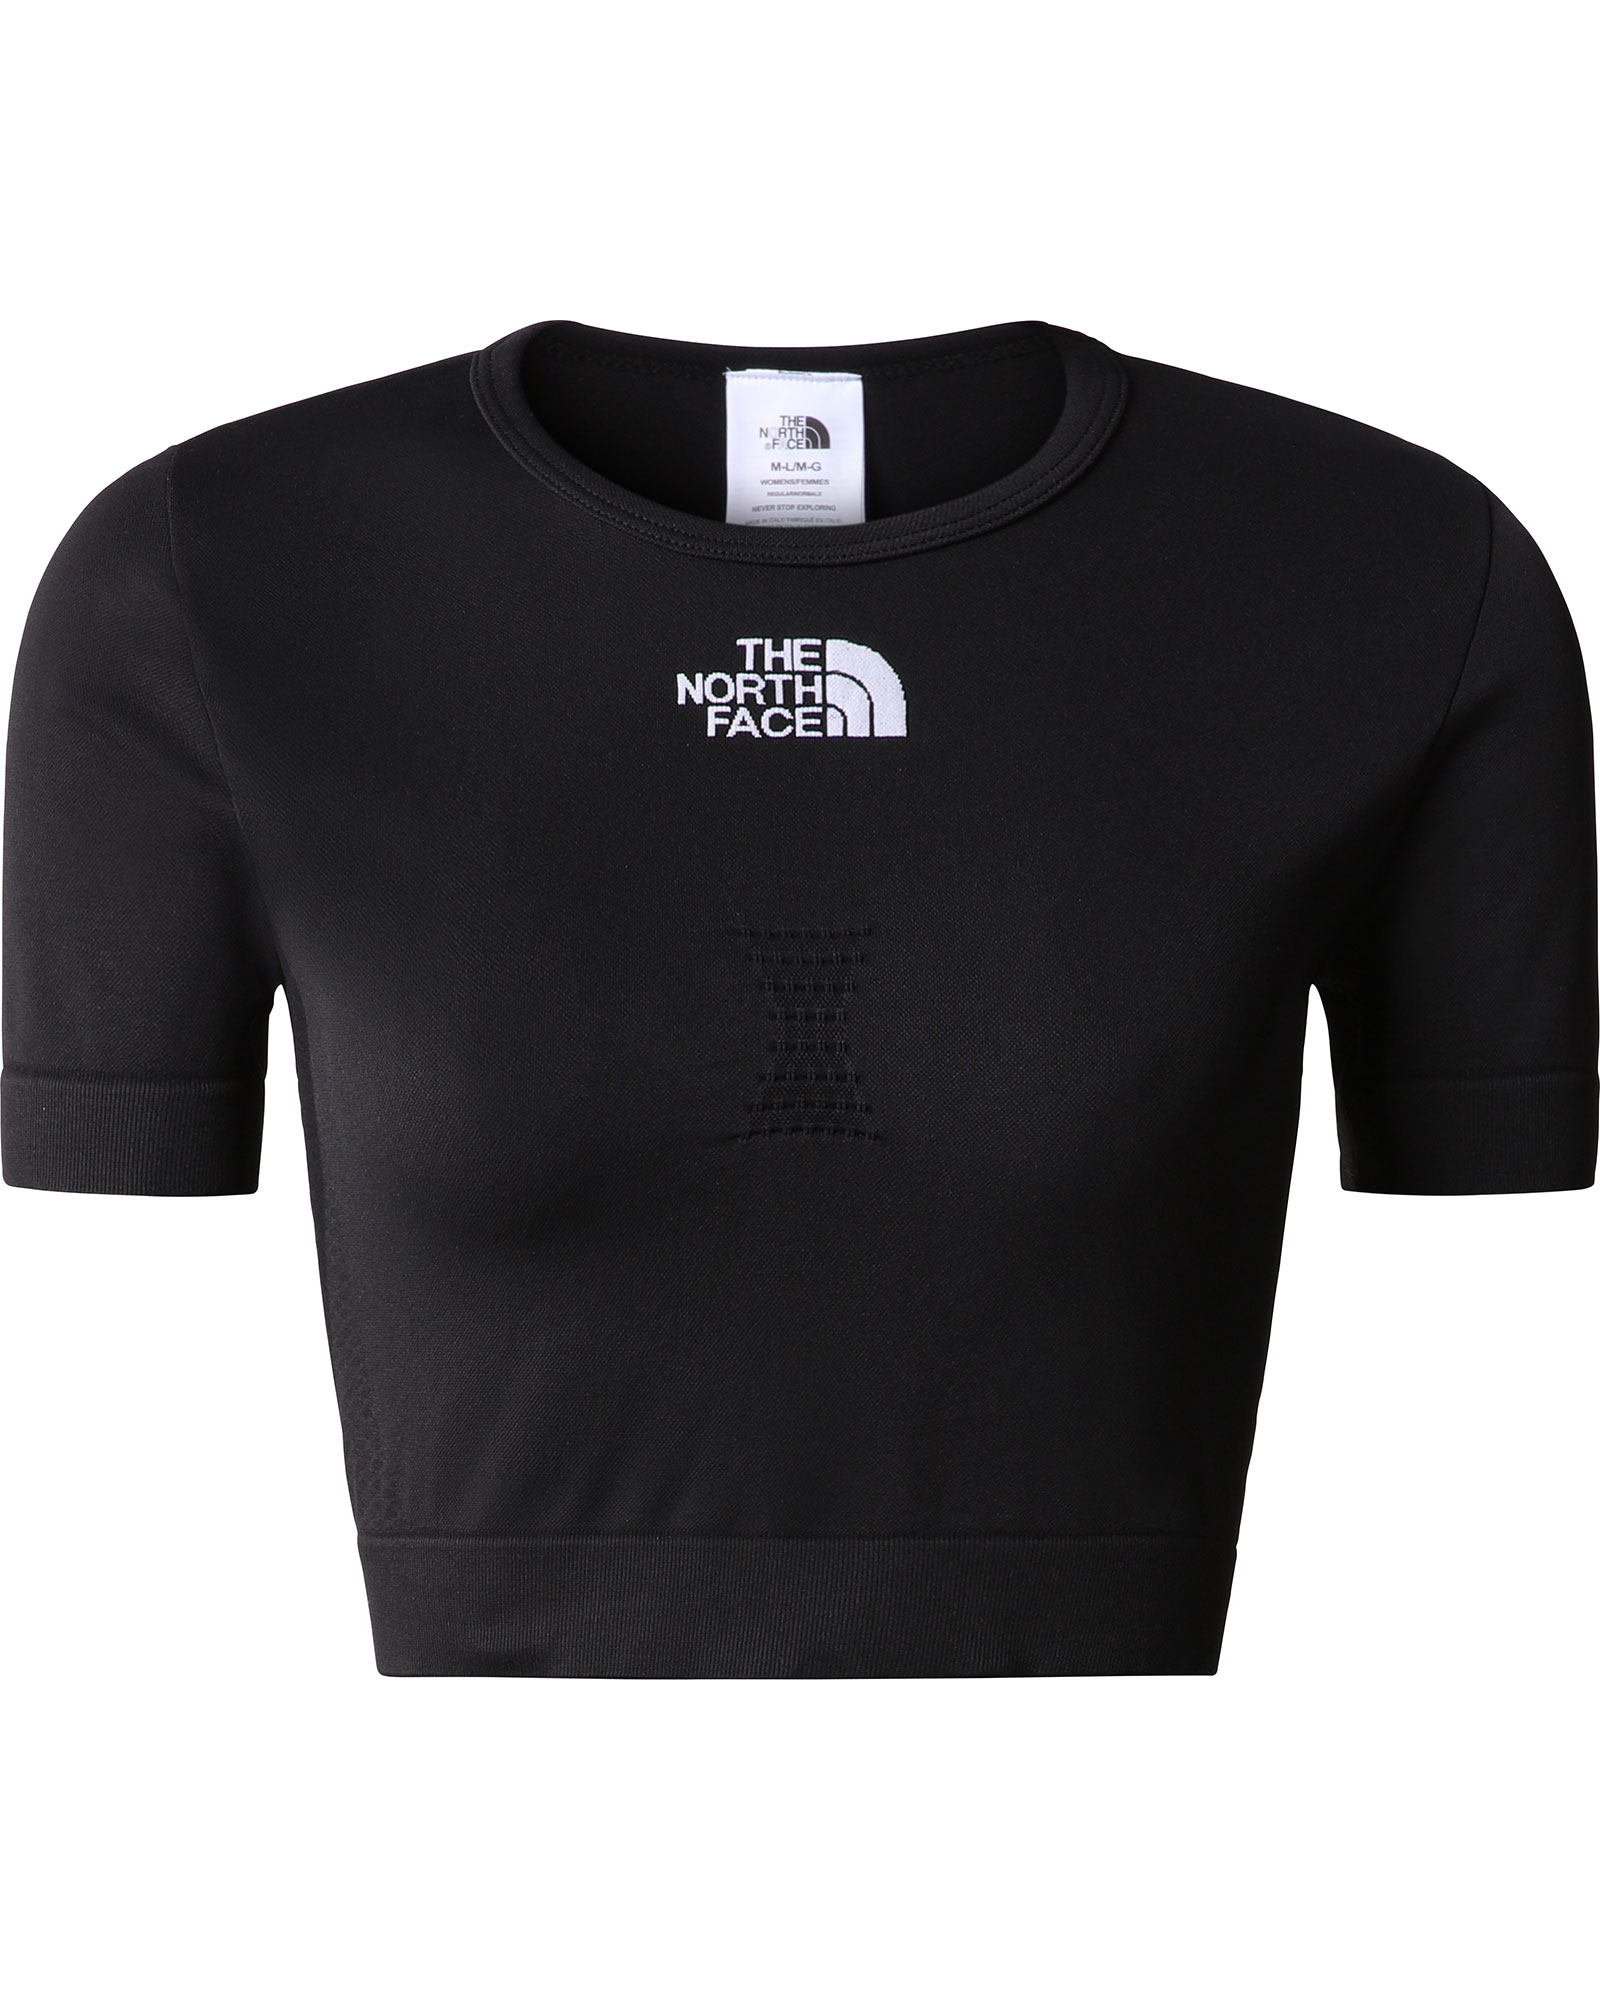 The North Face Women’s New Seamless T Shirt - TNF Black M/L